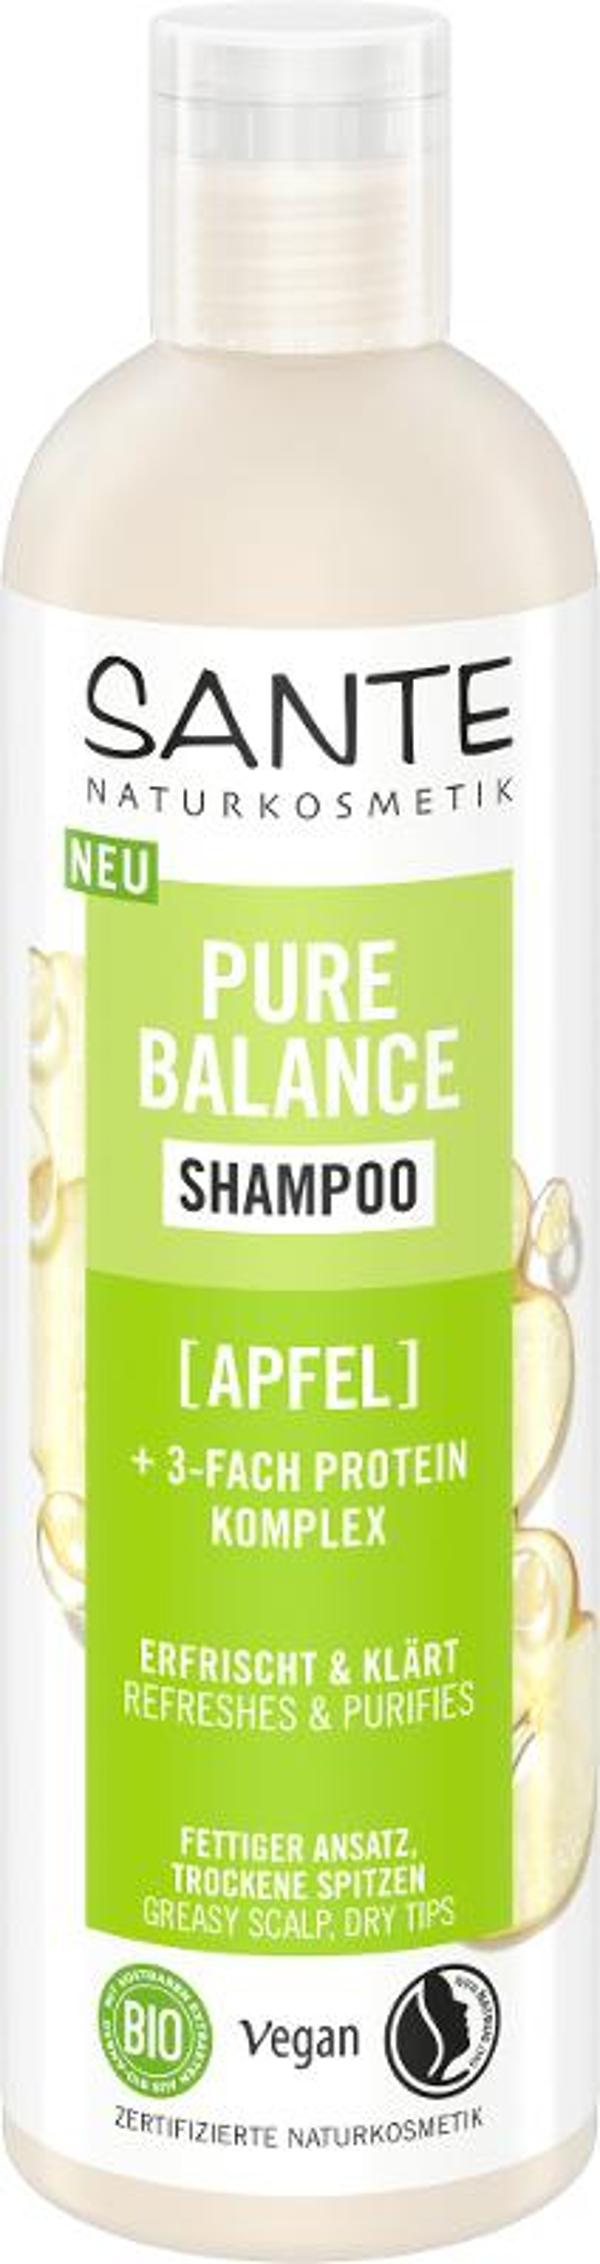 Produktfoto zu Pure Balance Shampoo Apfel 250ml